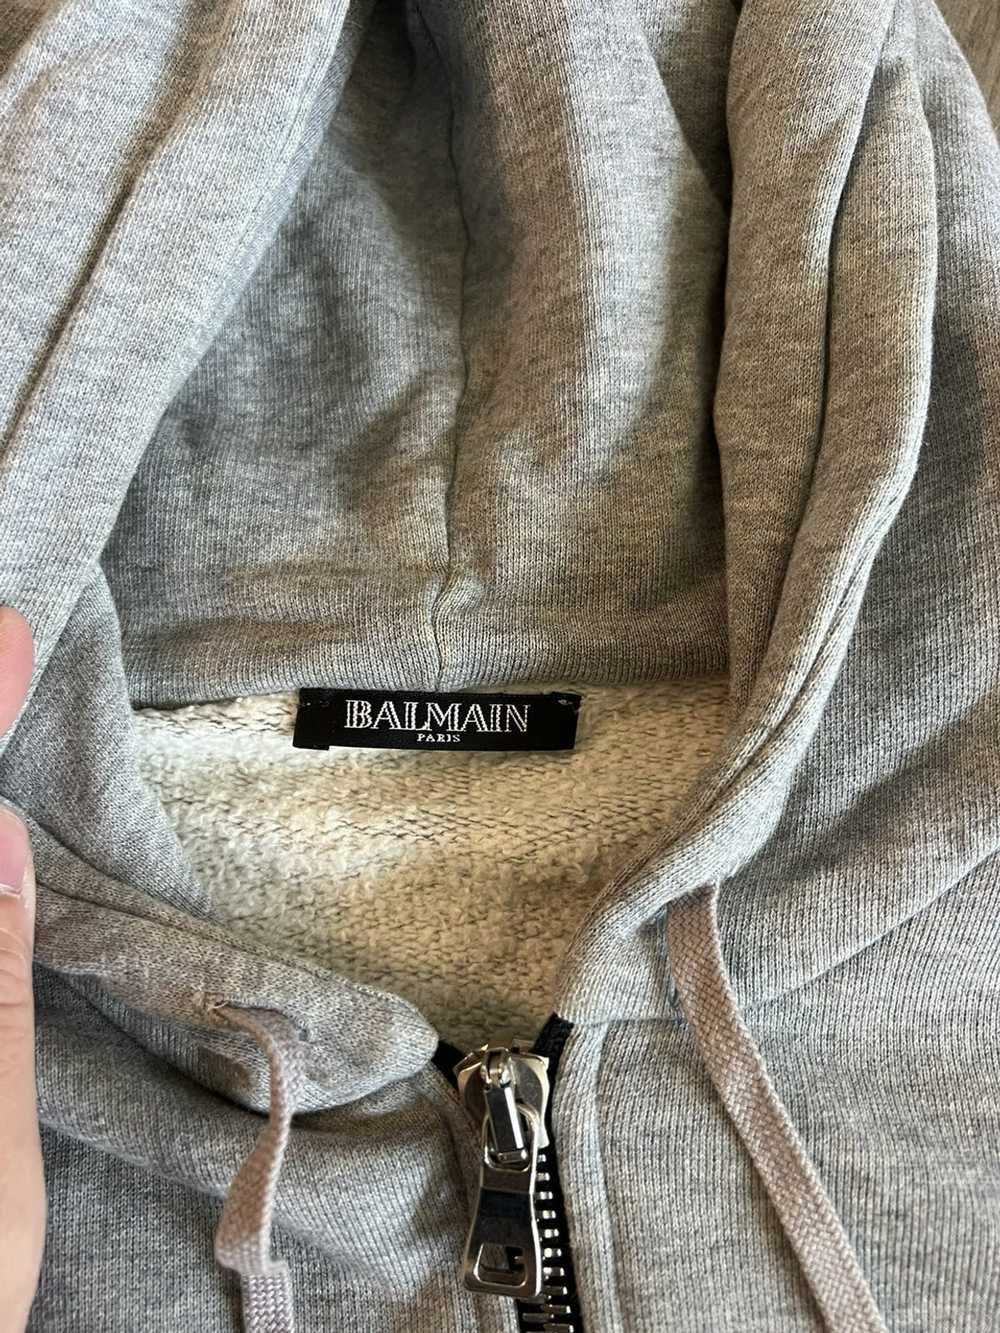 Balmain Balmain zip hoodie - image 2